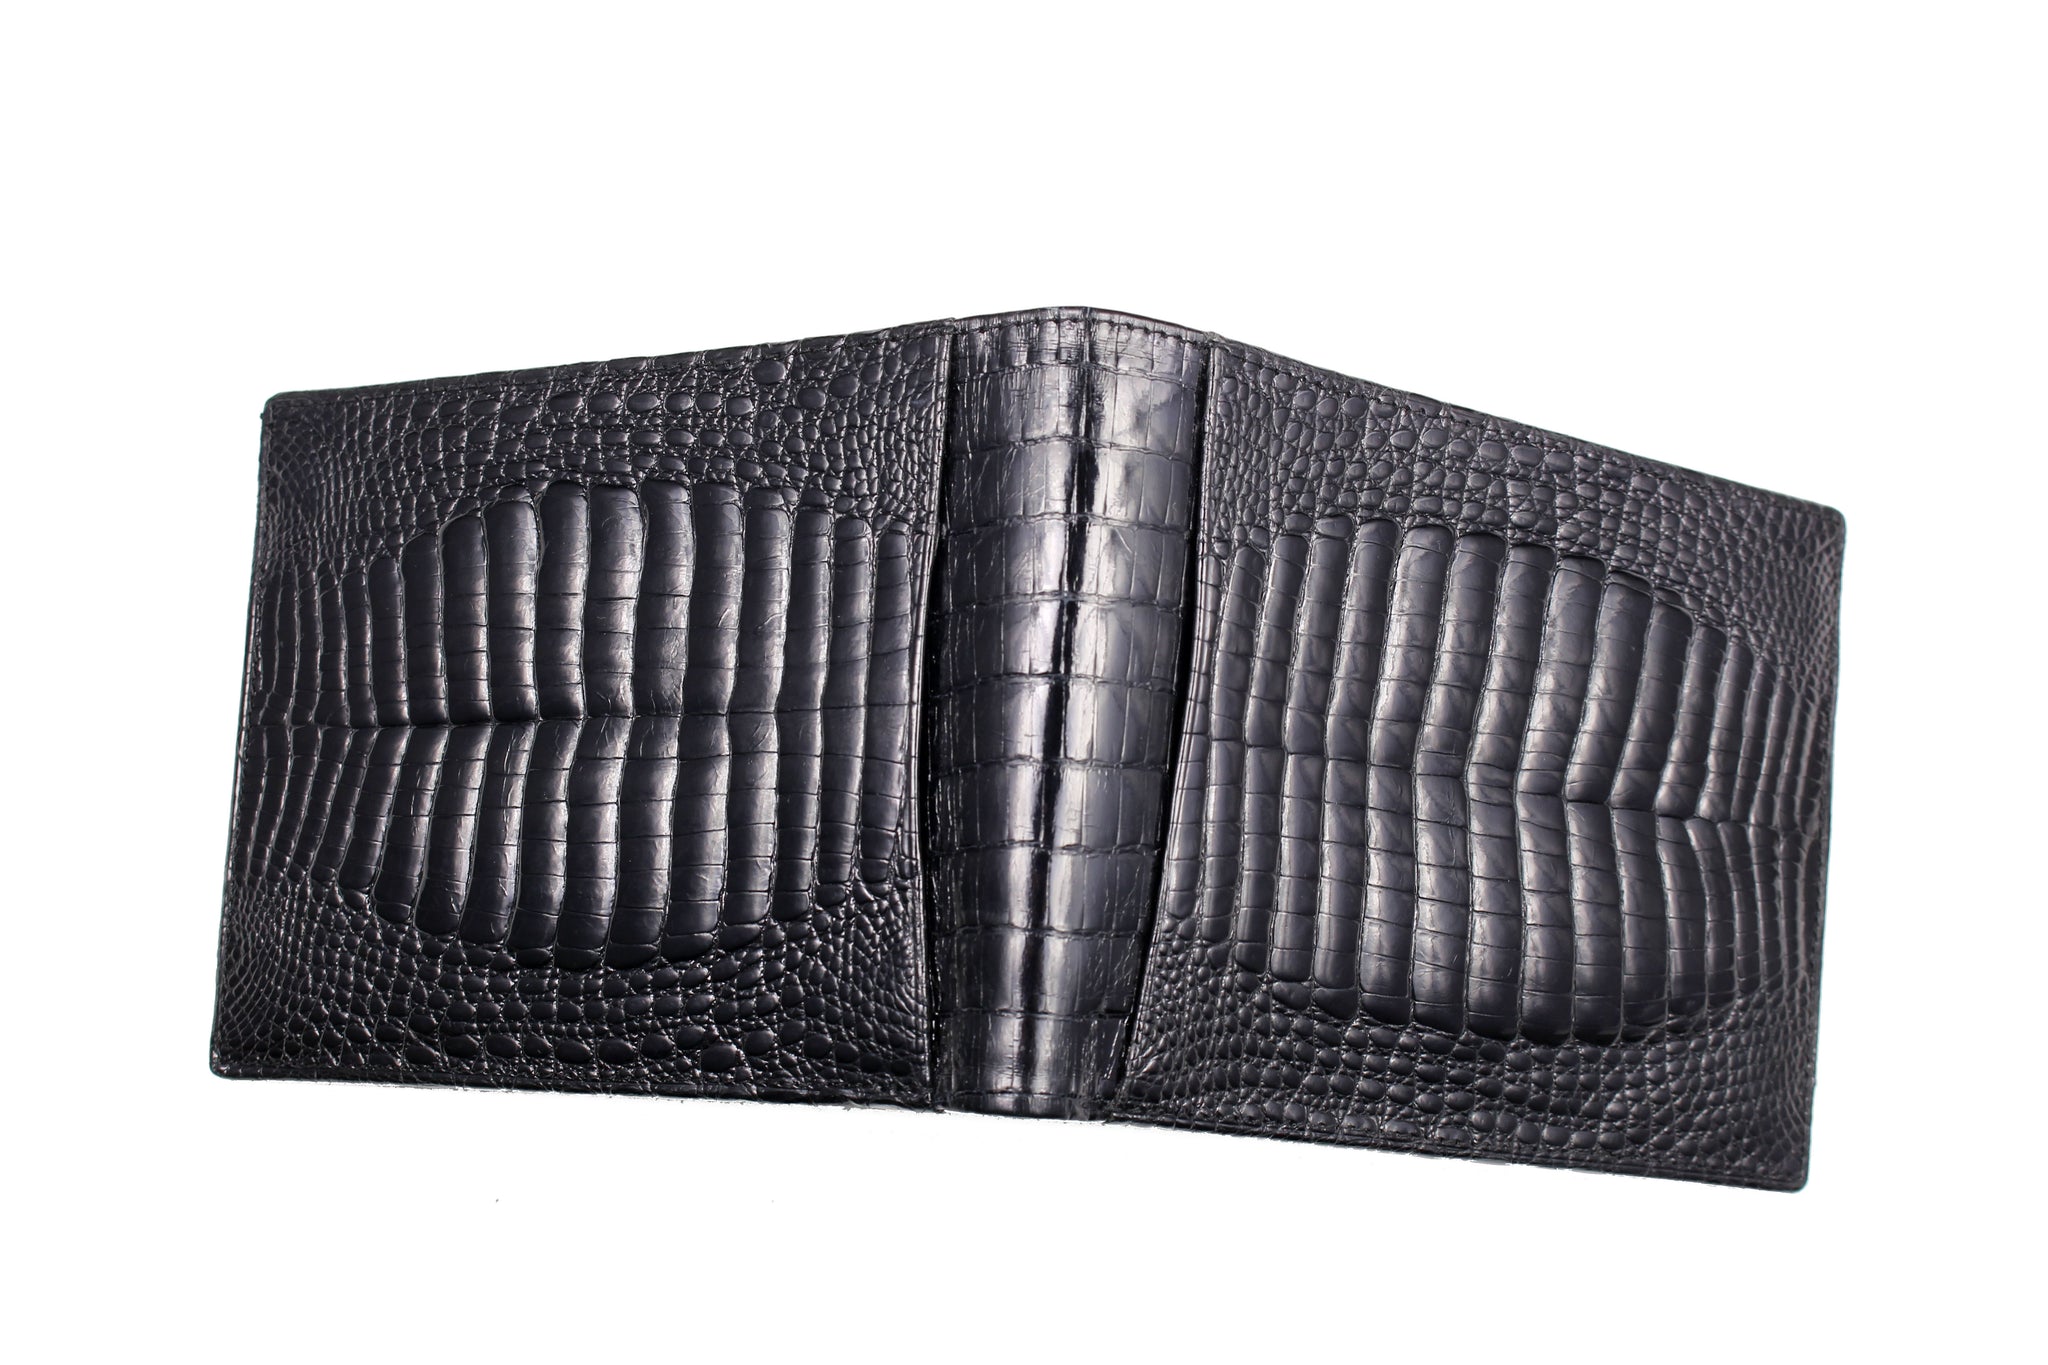 Black Genuine Stomach Crocodile Skin Wallet! Two-Tone